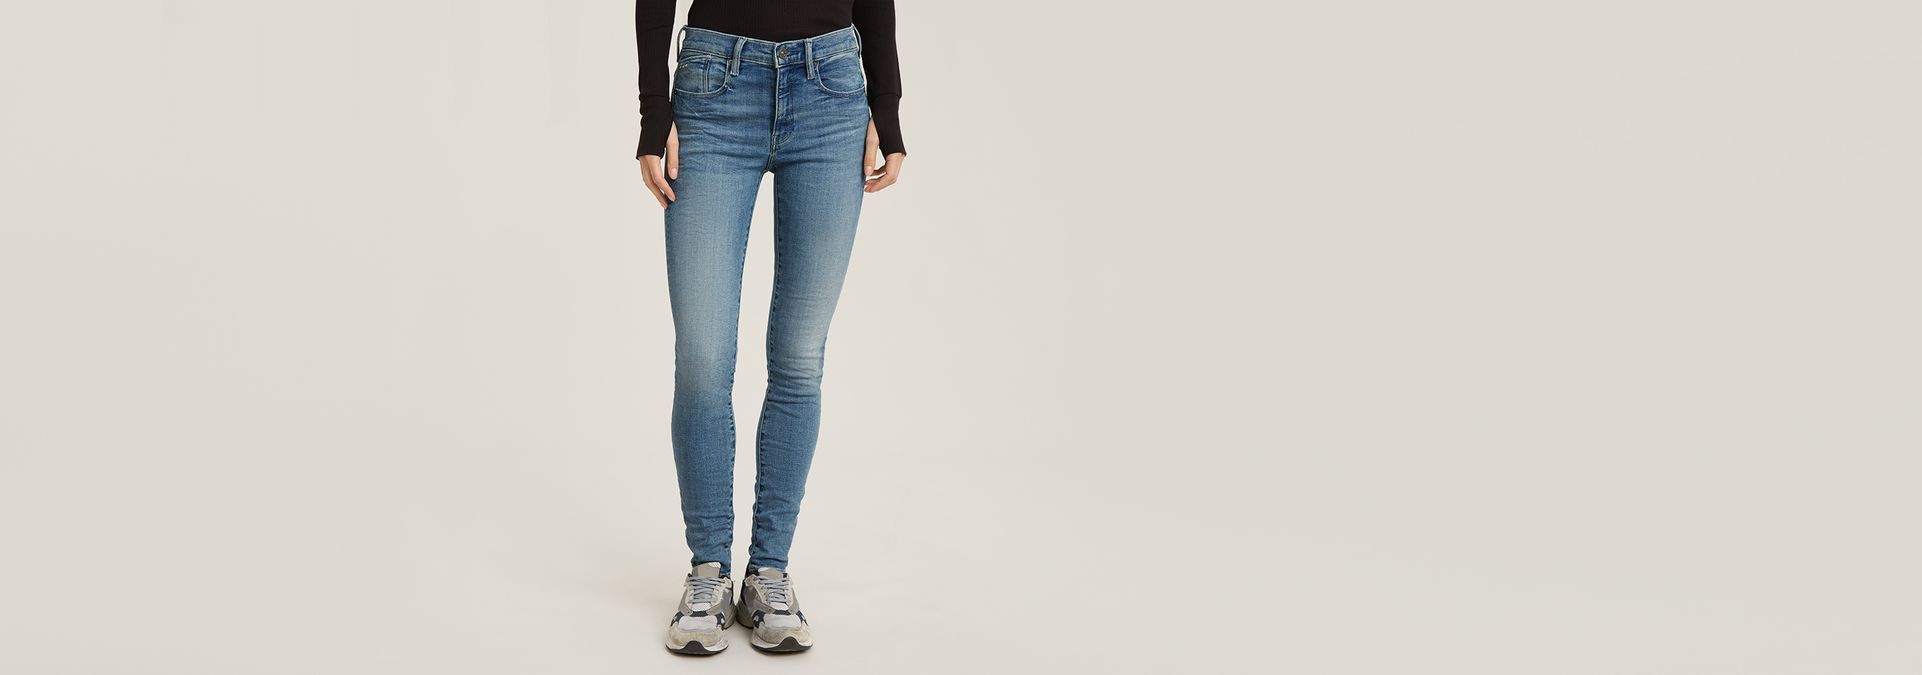 Lhana Skinny Jeans | Light blue | G-Star RAW®